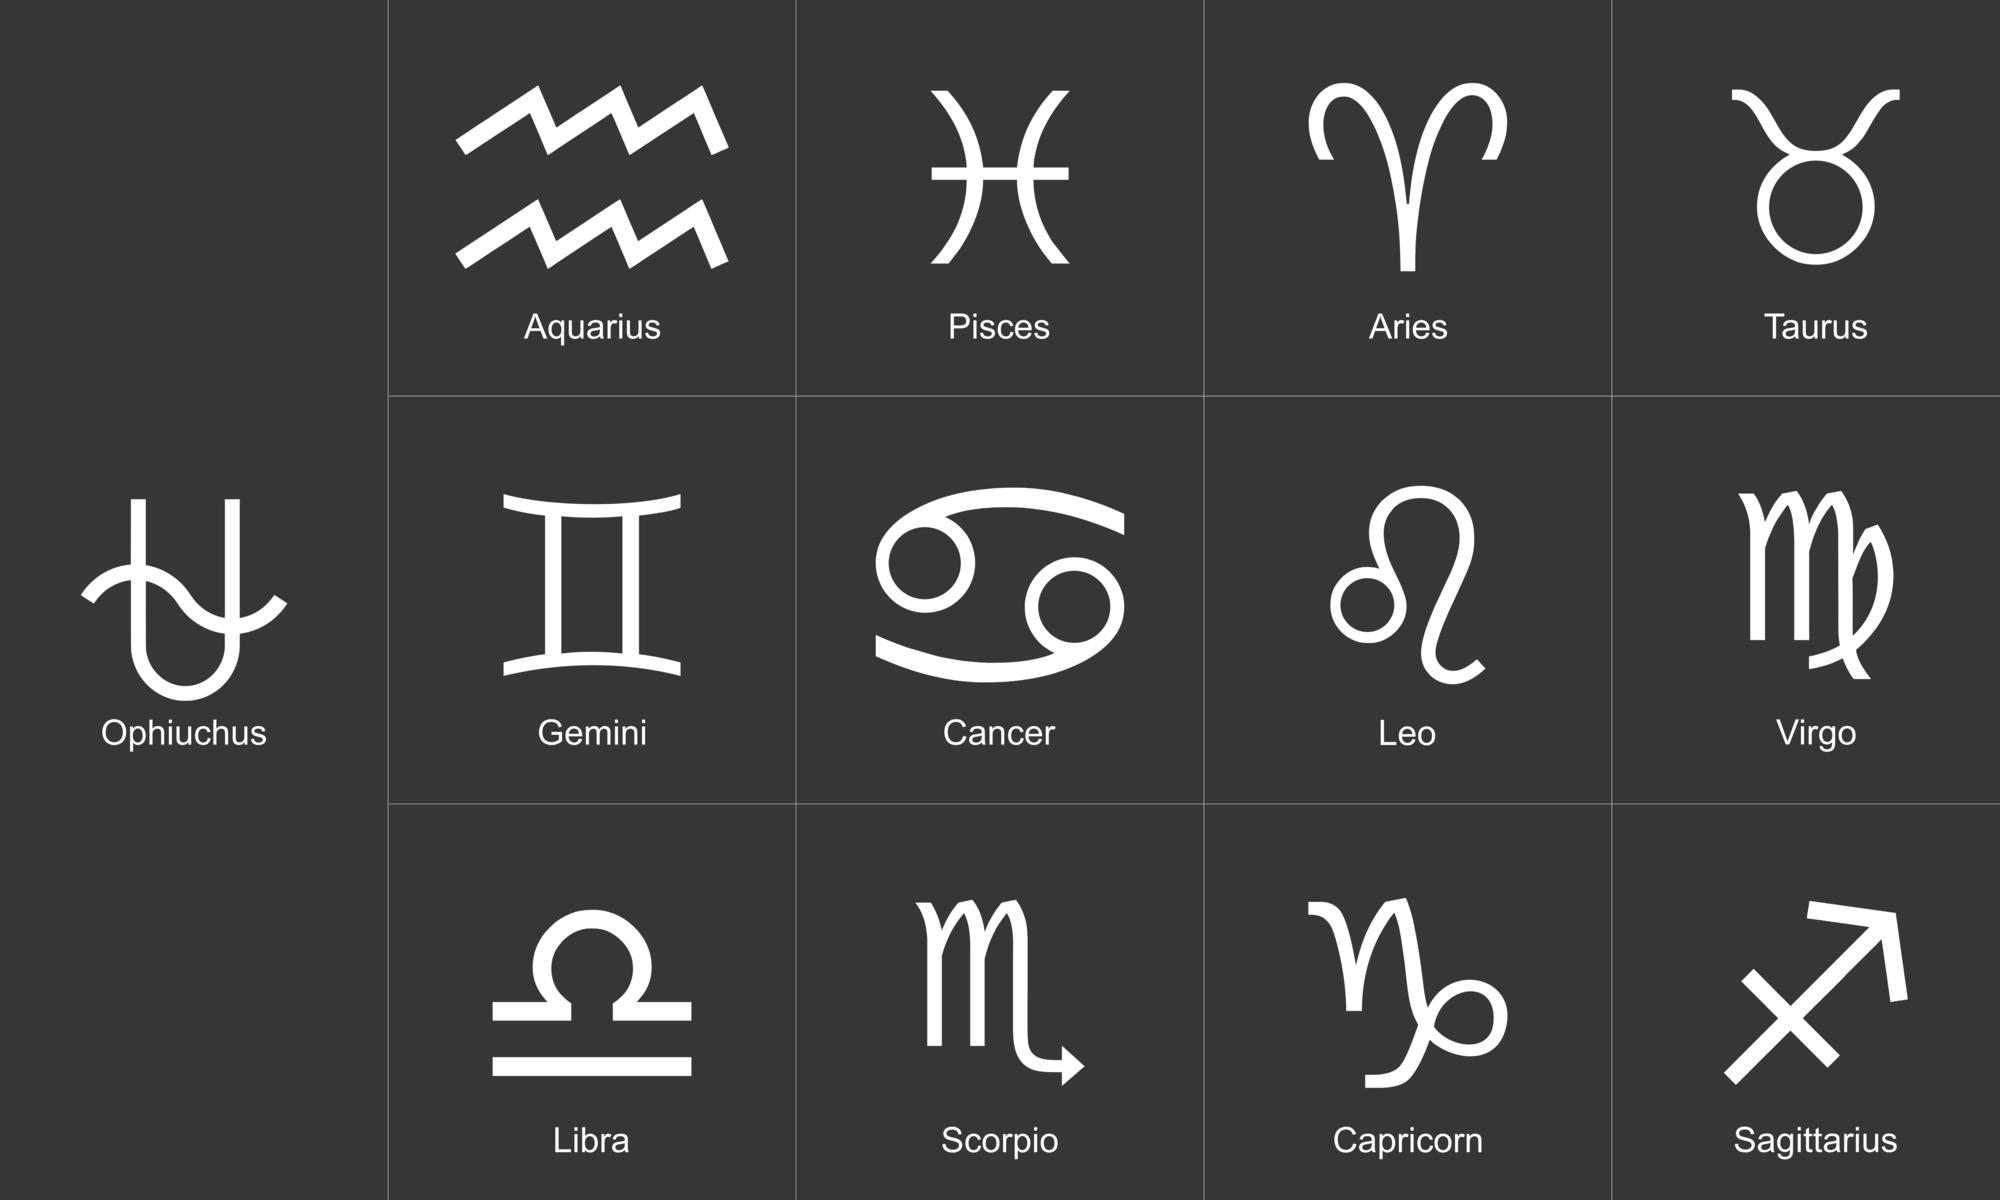 13 Zodiac signs